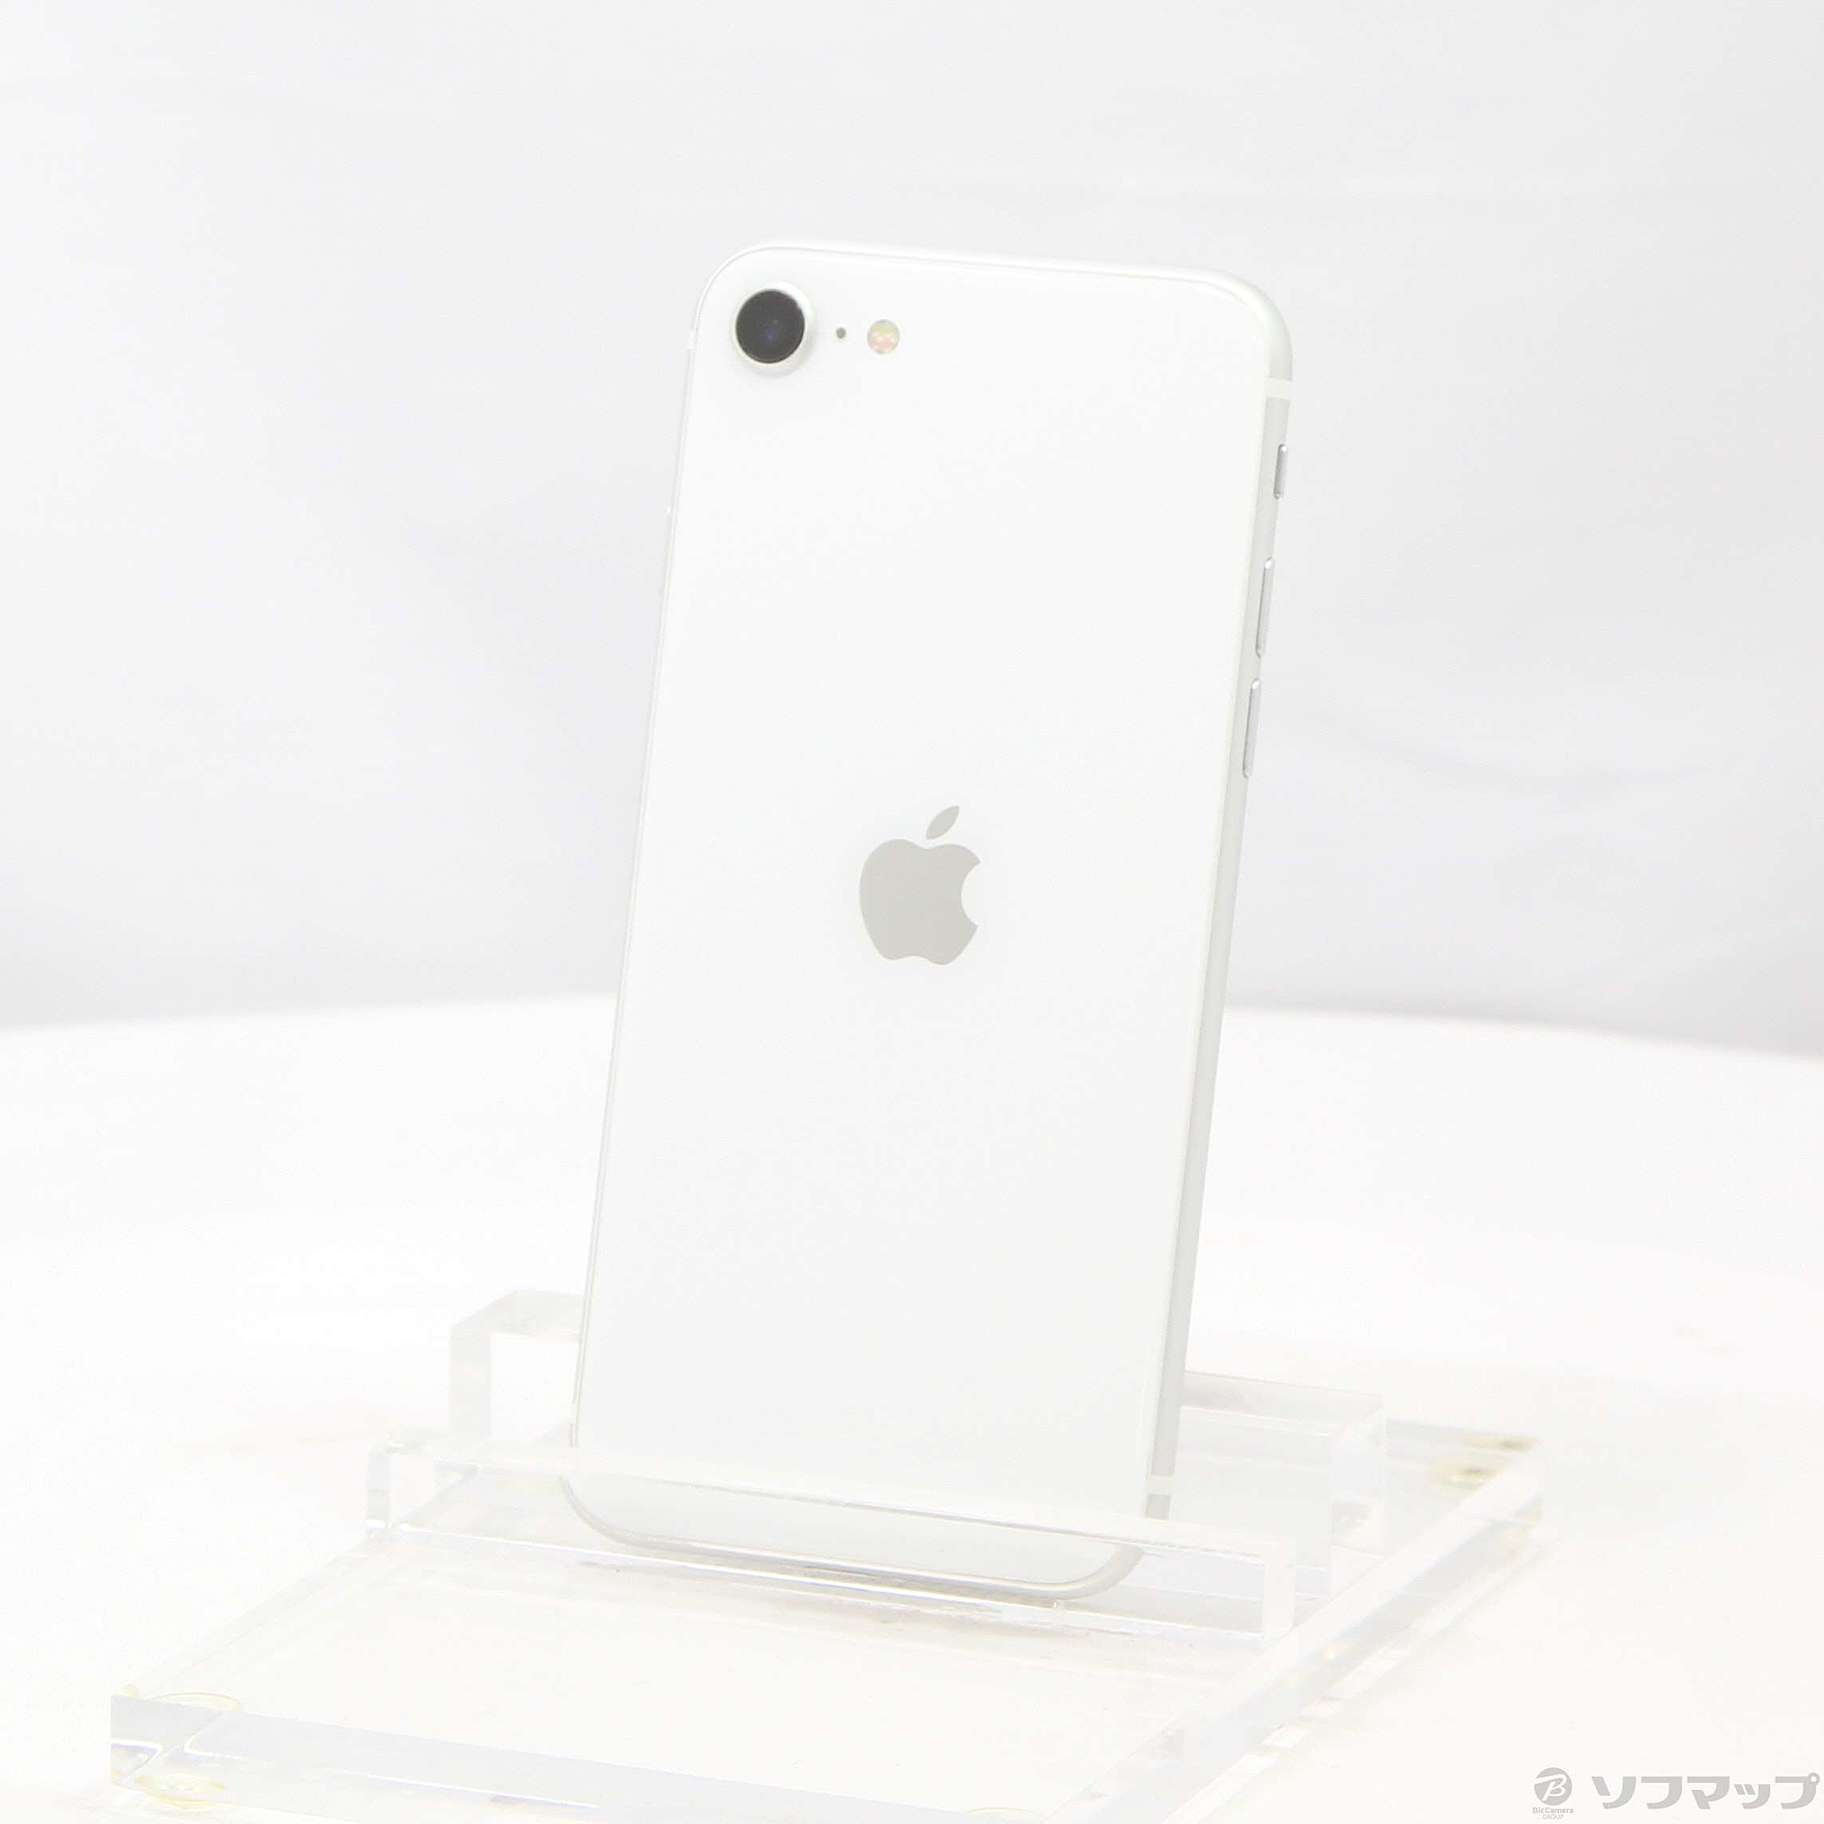 iPhone SE 第2世代 (SE2) ホワイト 128 GB SIMフリー - www